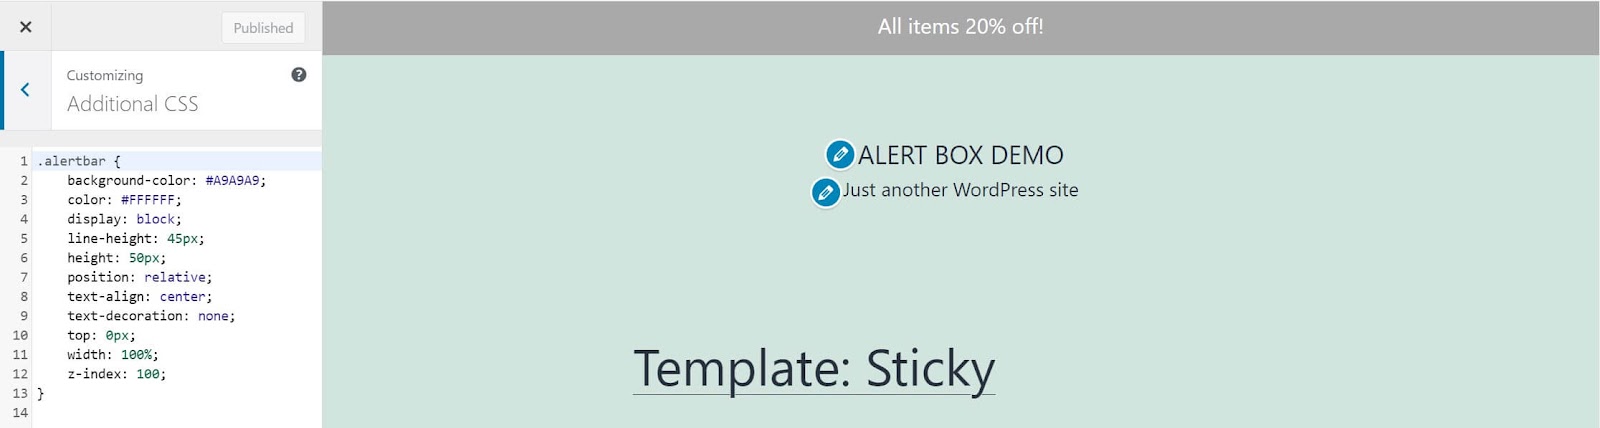 Alert box demo. WordPress Alert Message